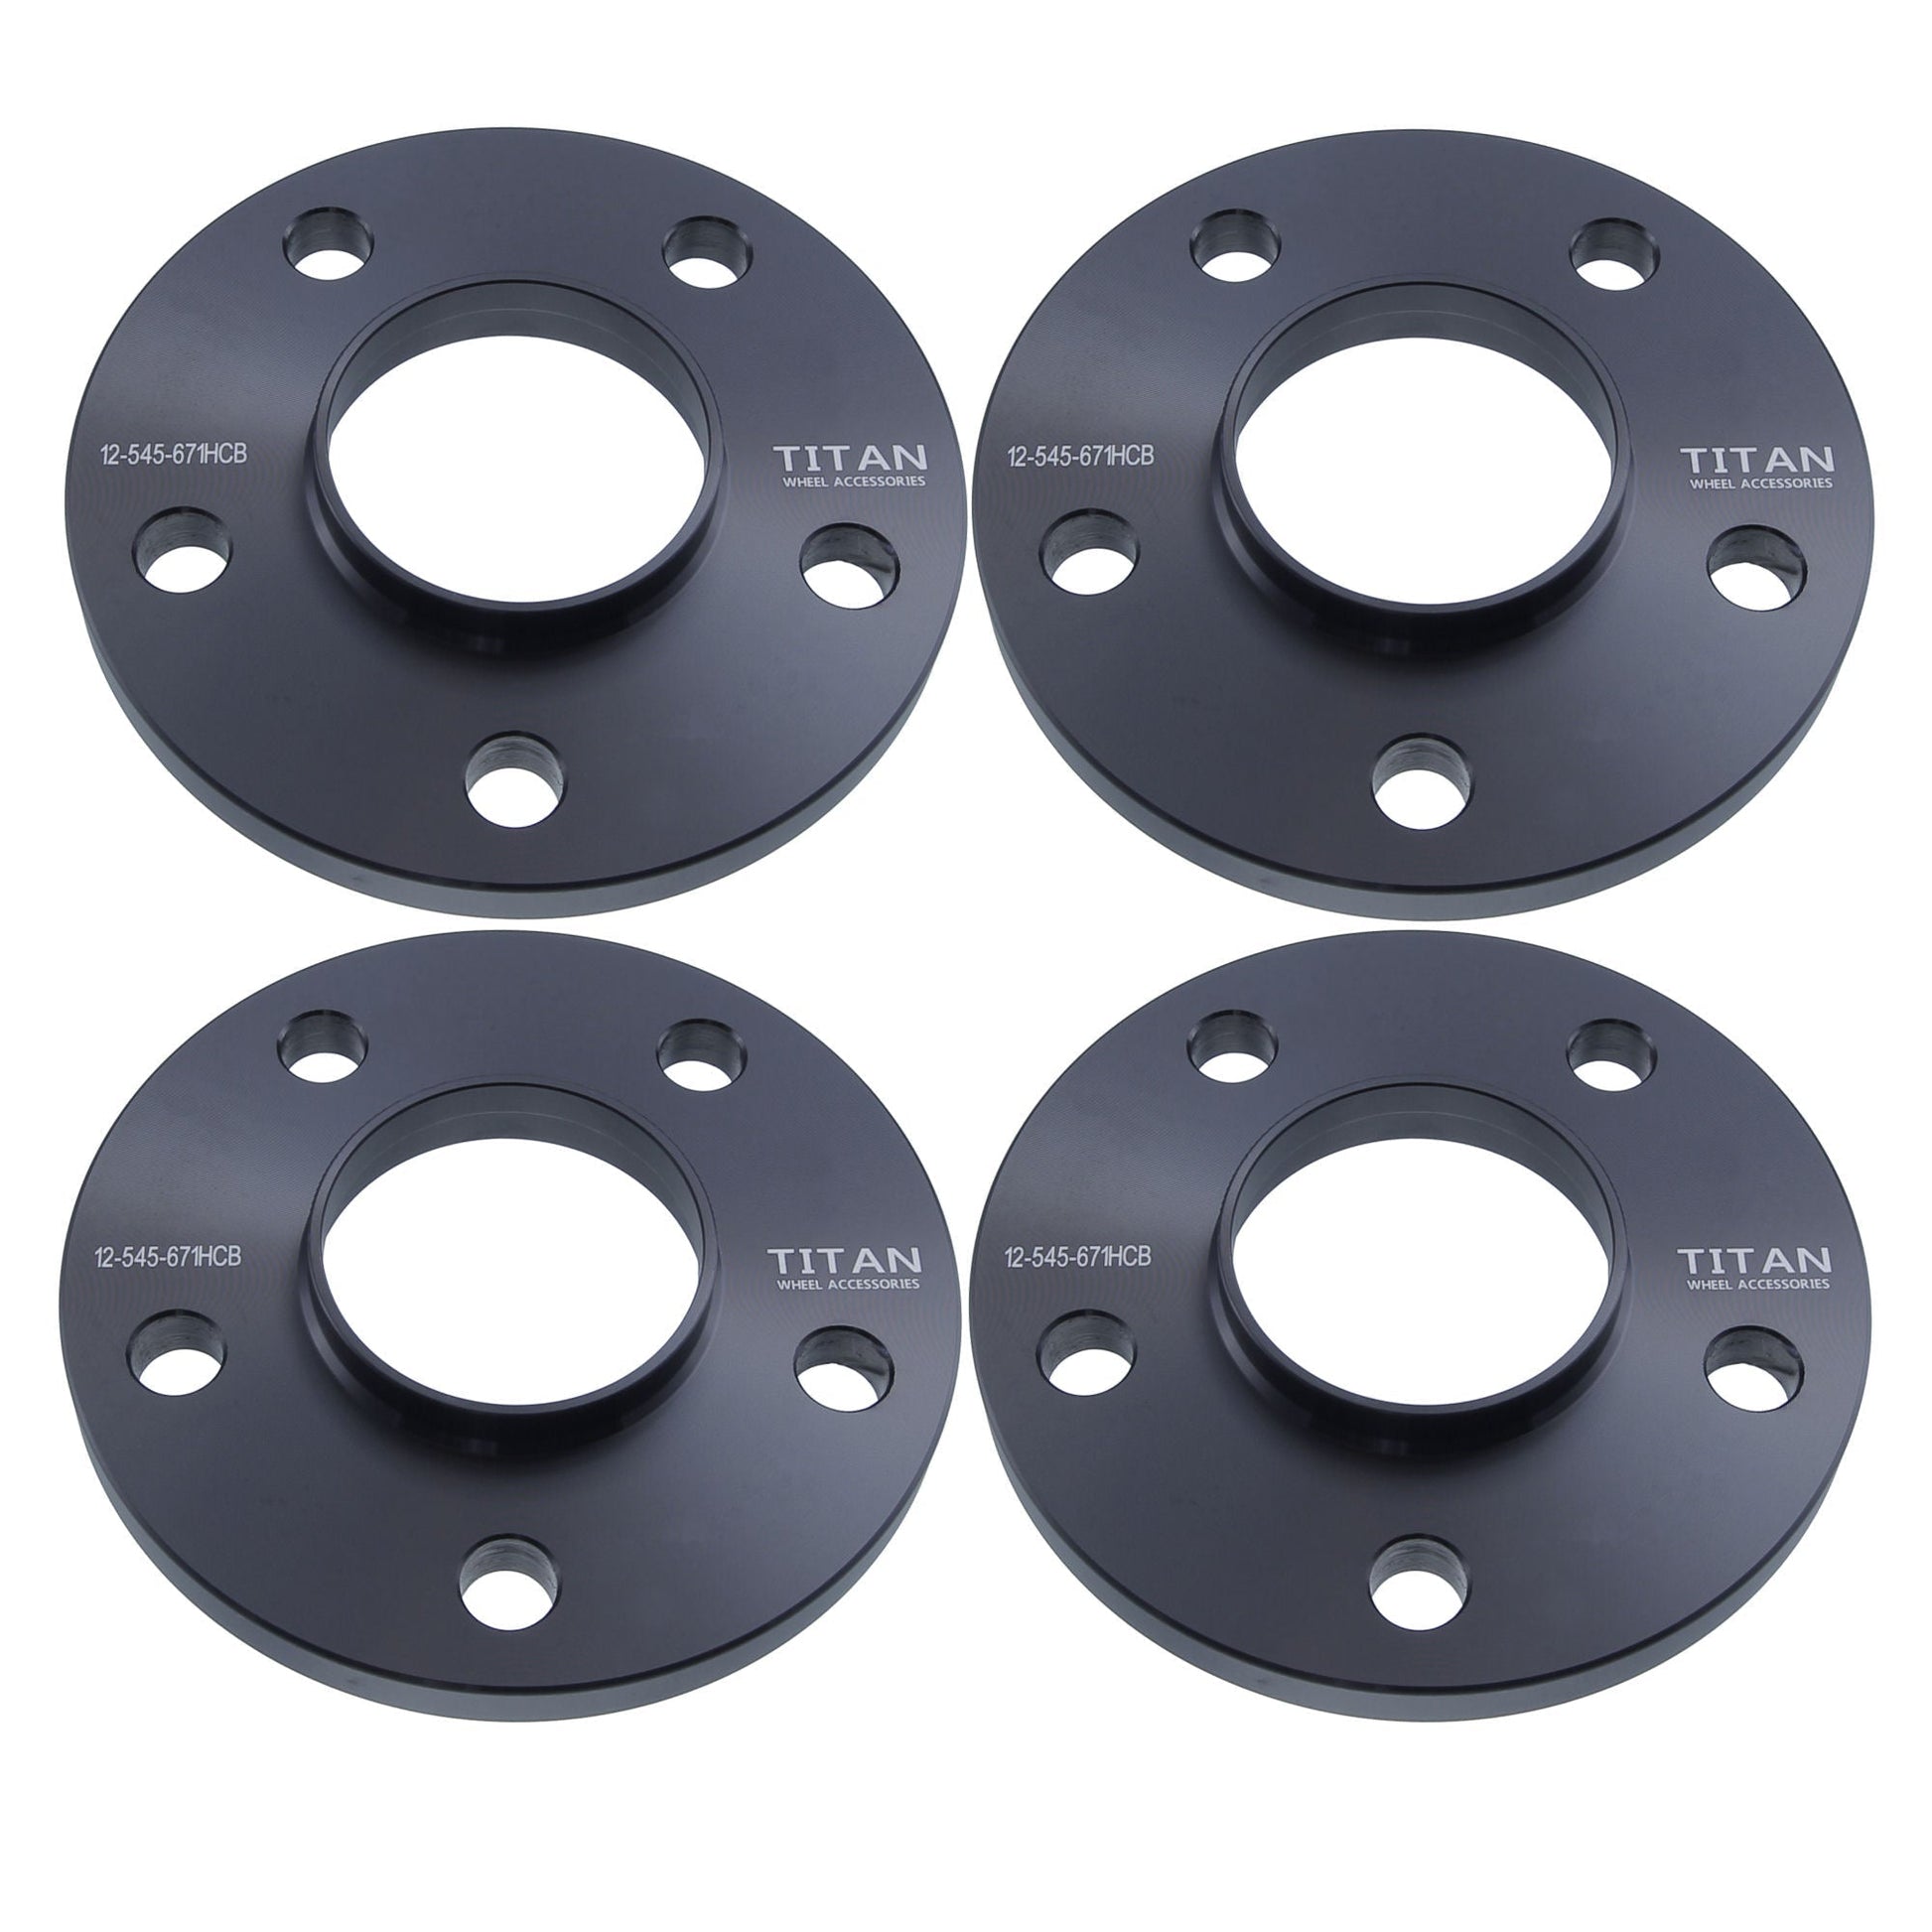 12mm Titan Wheel Spacers for Mazda RX7 RX8 Miata | 5x114.3 | 67.1  Hubcentric | - Set of 4